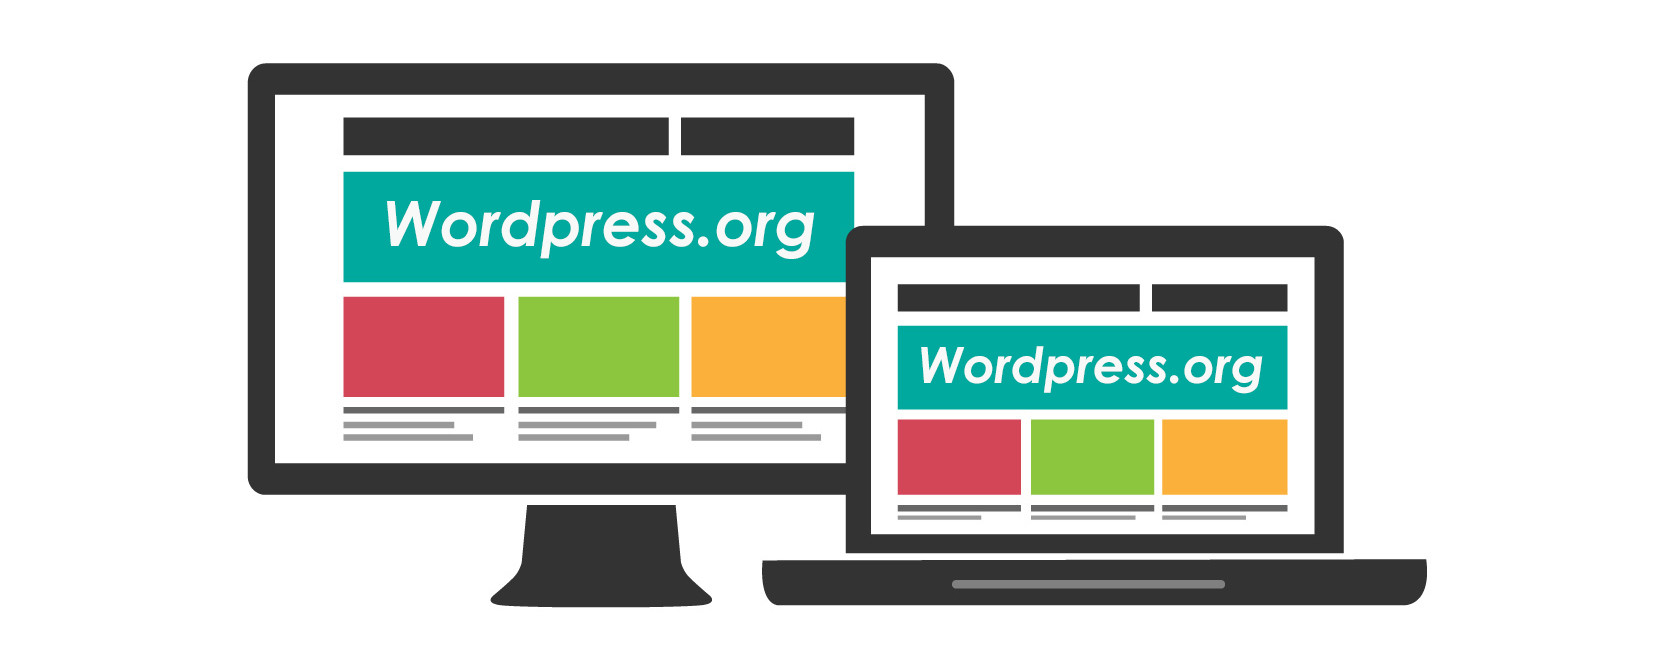 recomendamos wordpress.org business